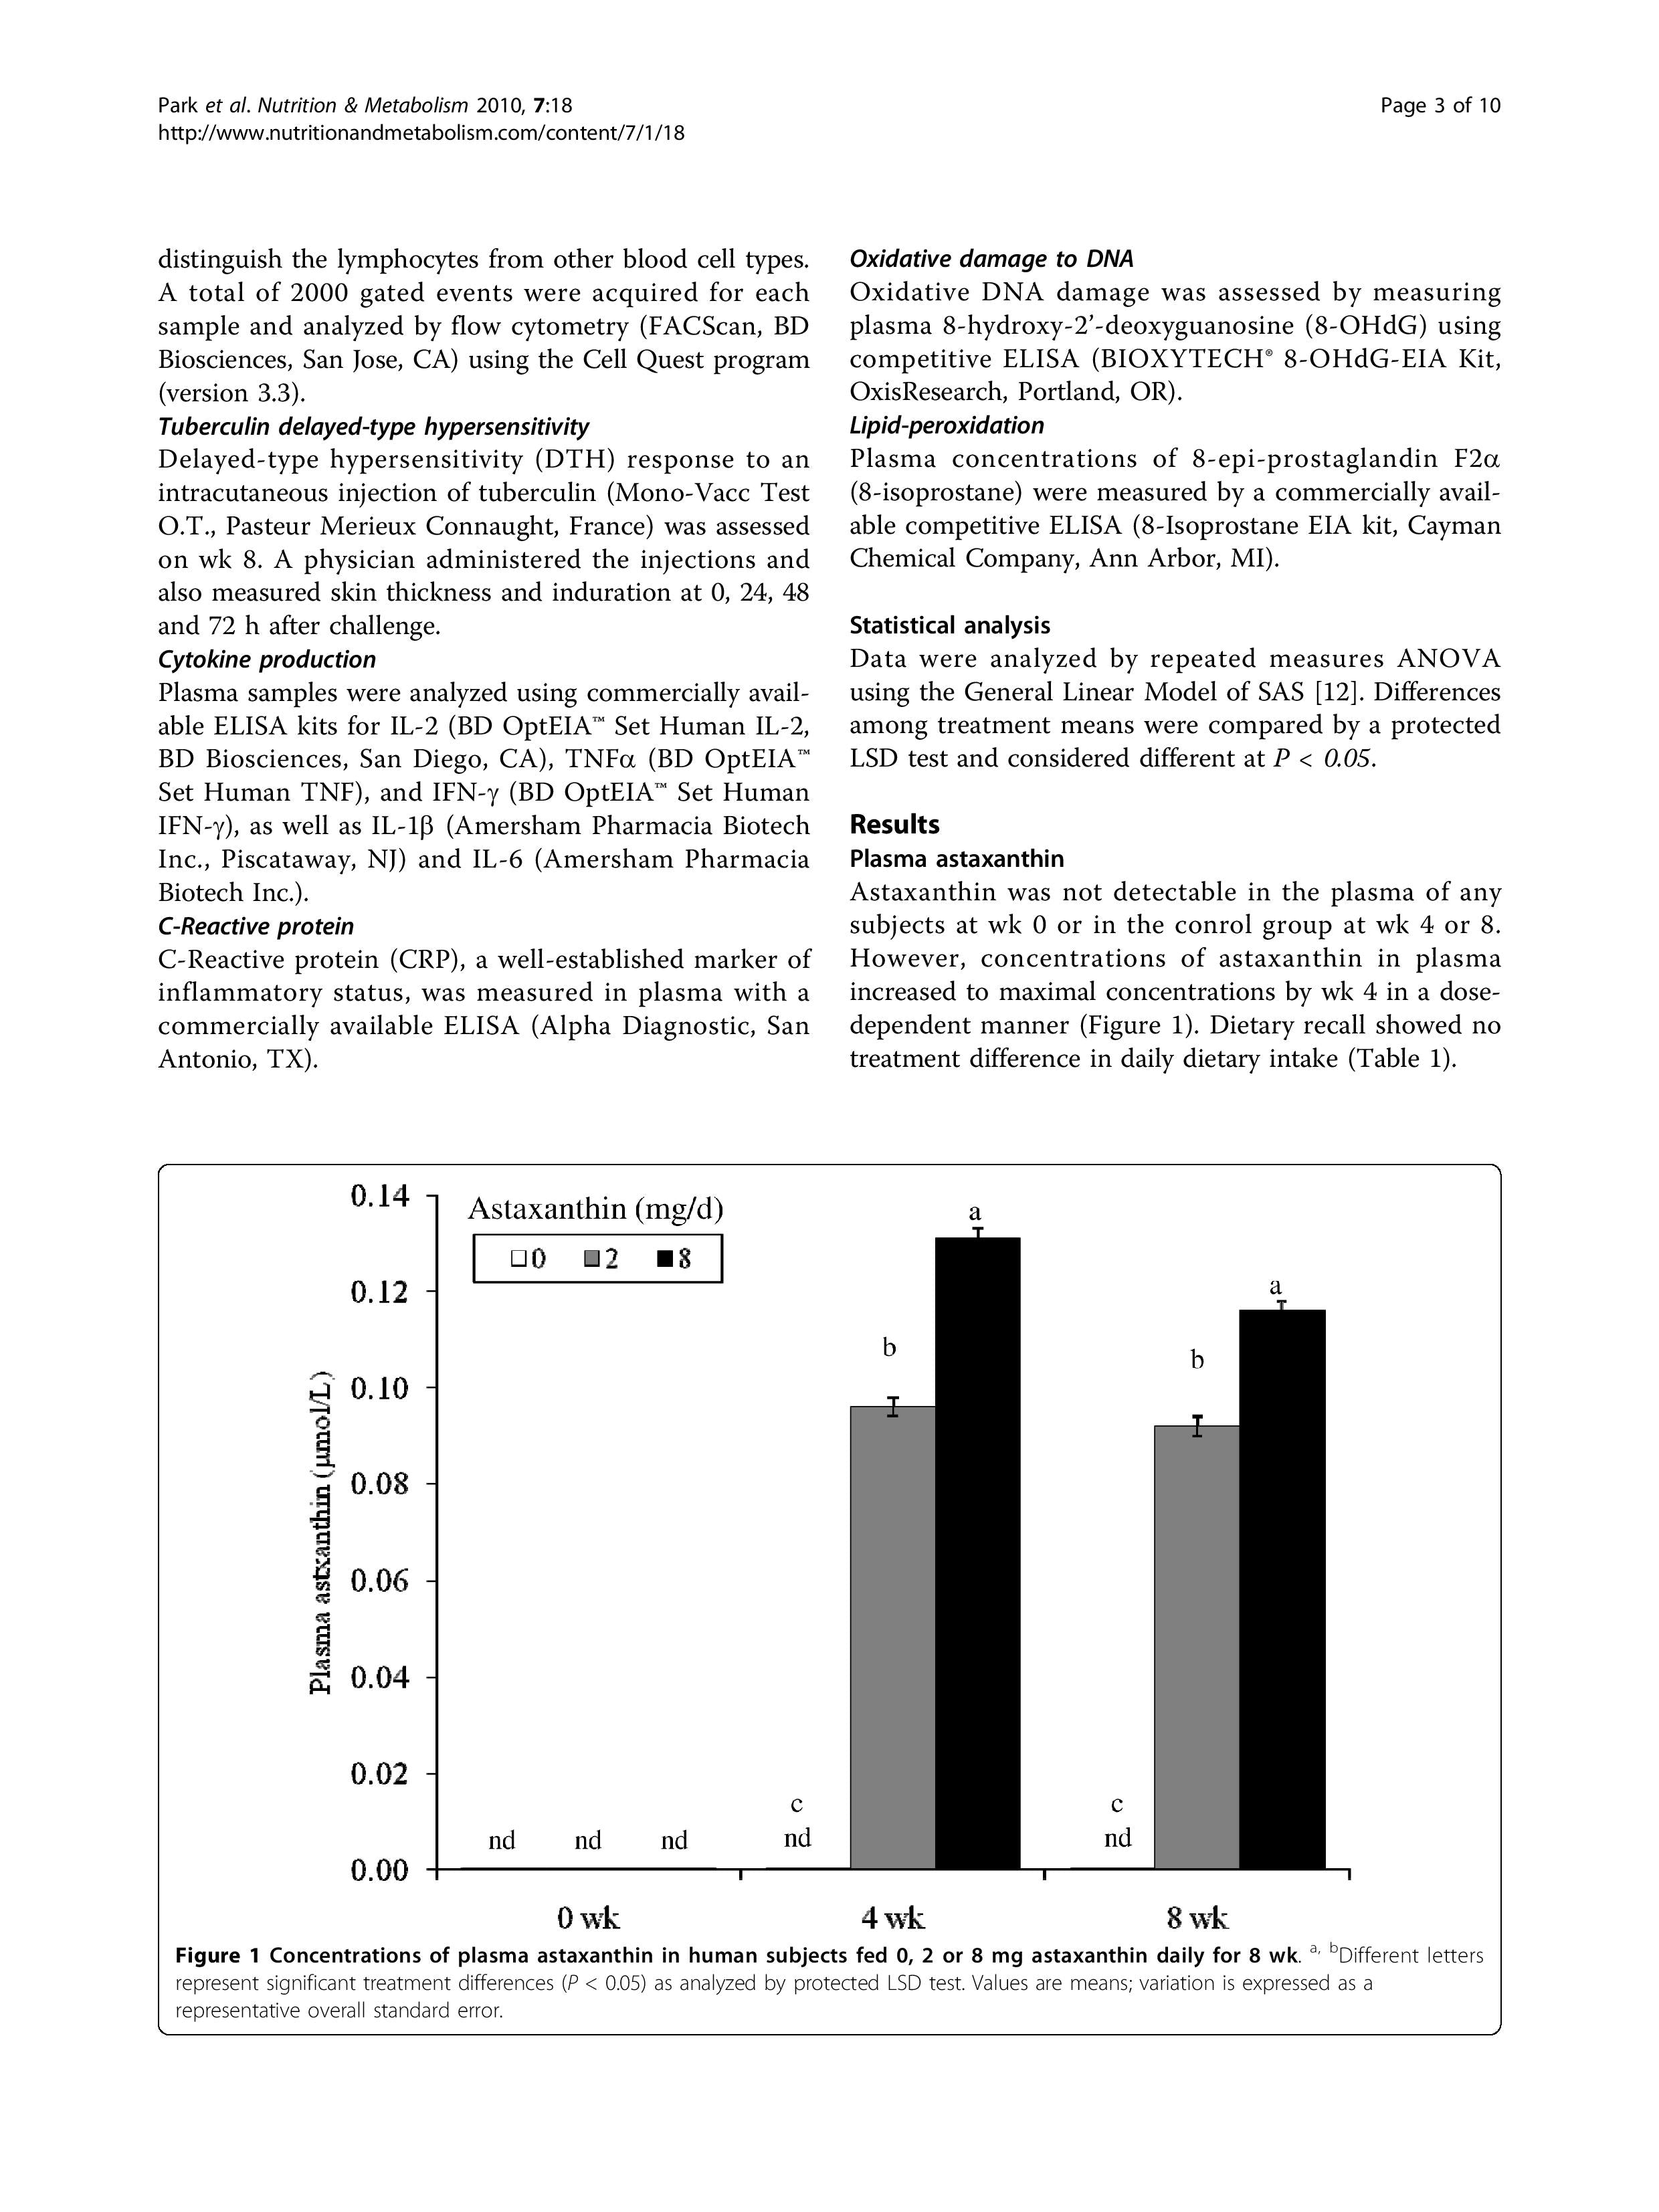 AX Enhance Immune Response-Park2010-page-003